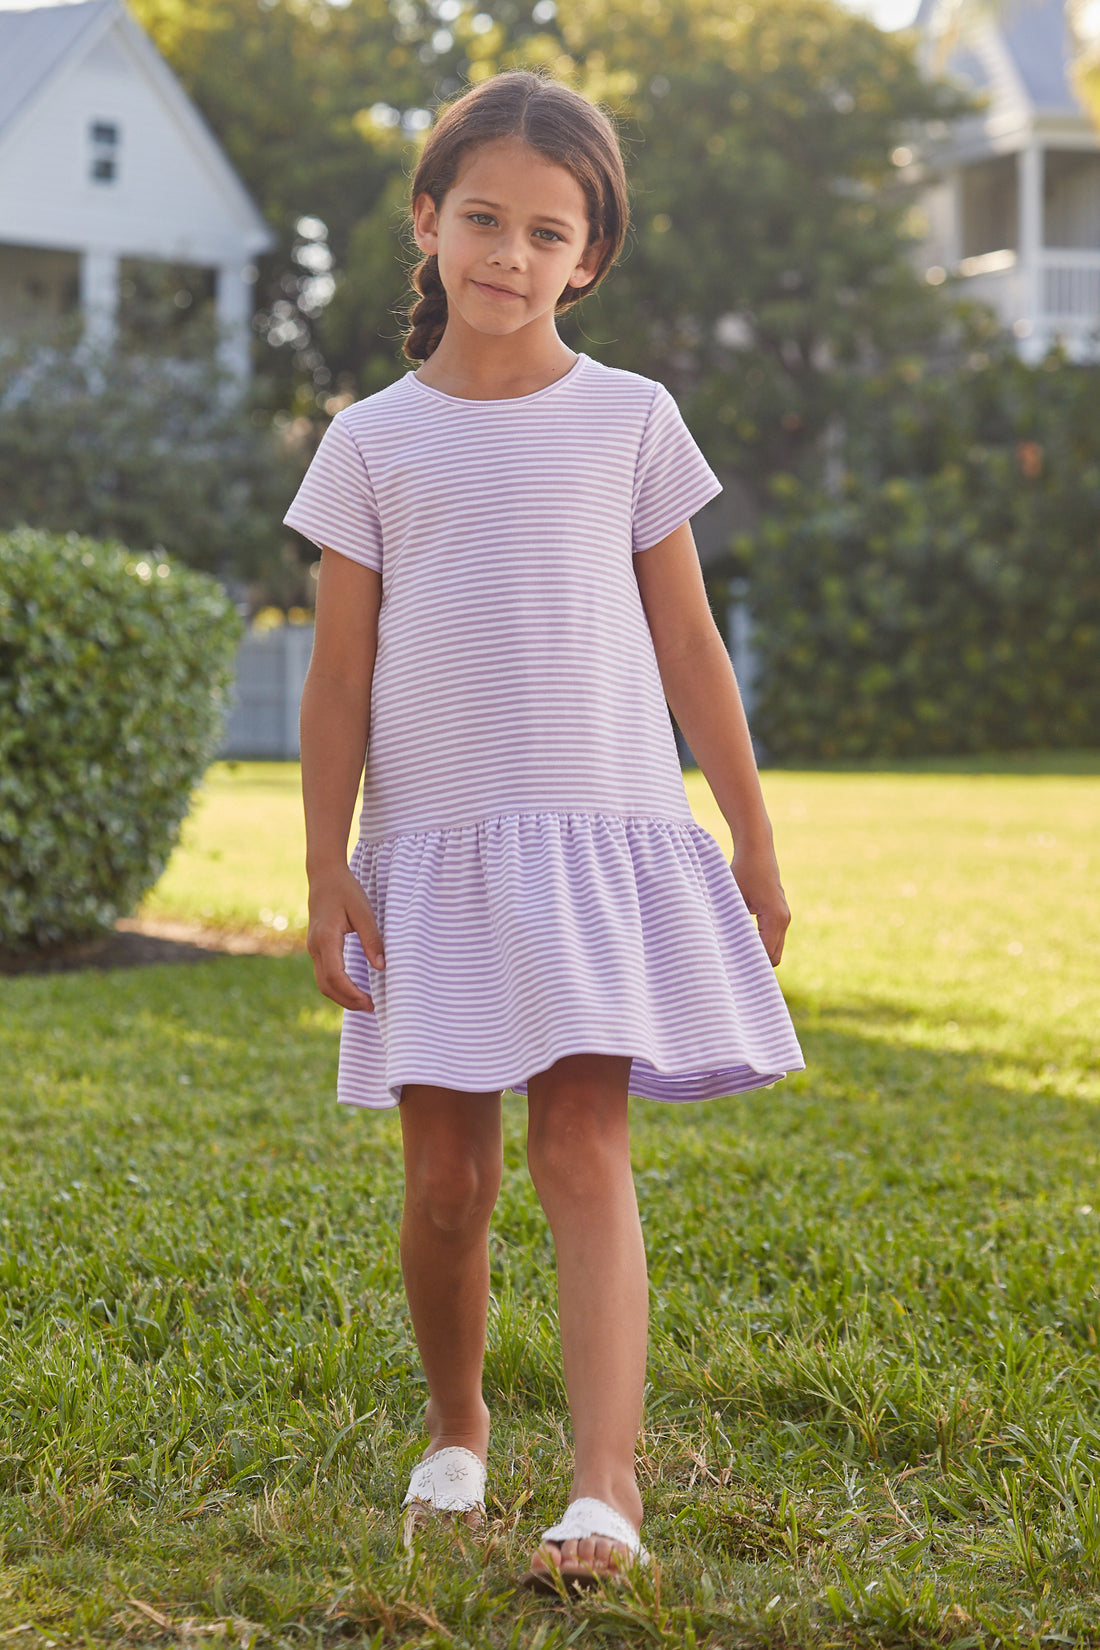 Chanel Dress Lavender Stripe